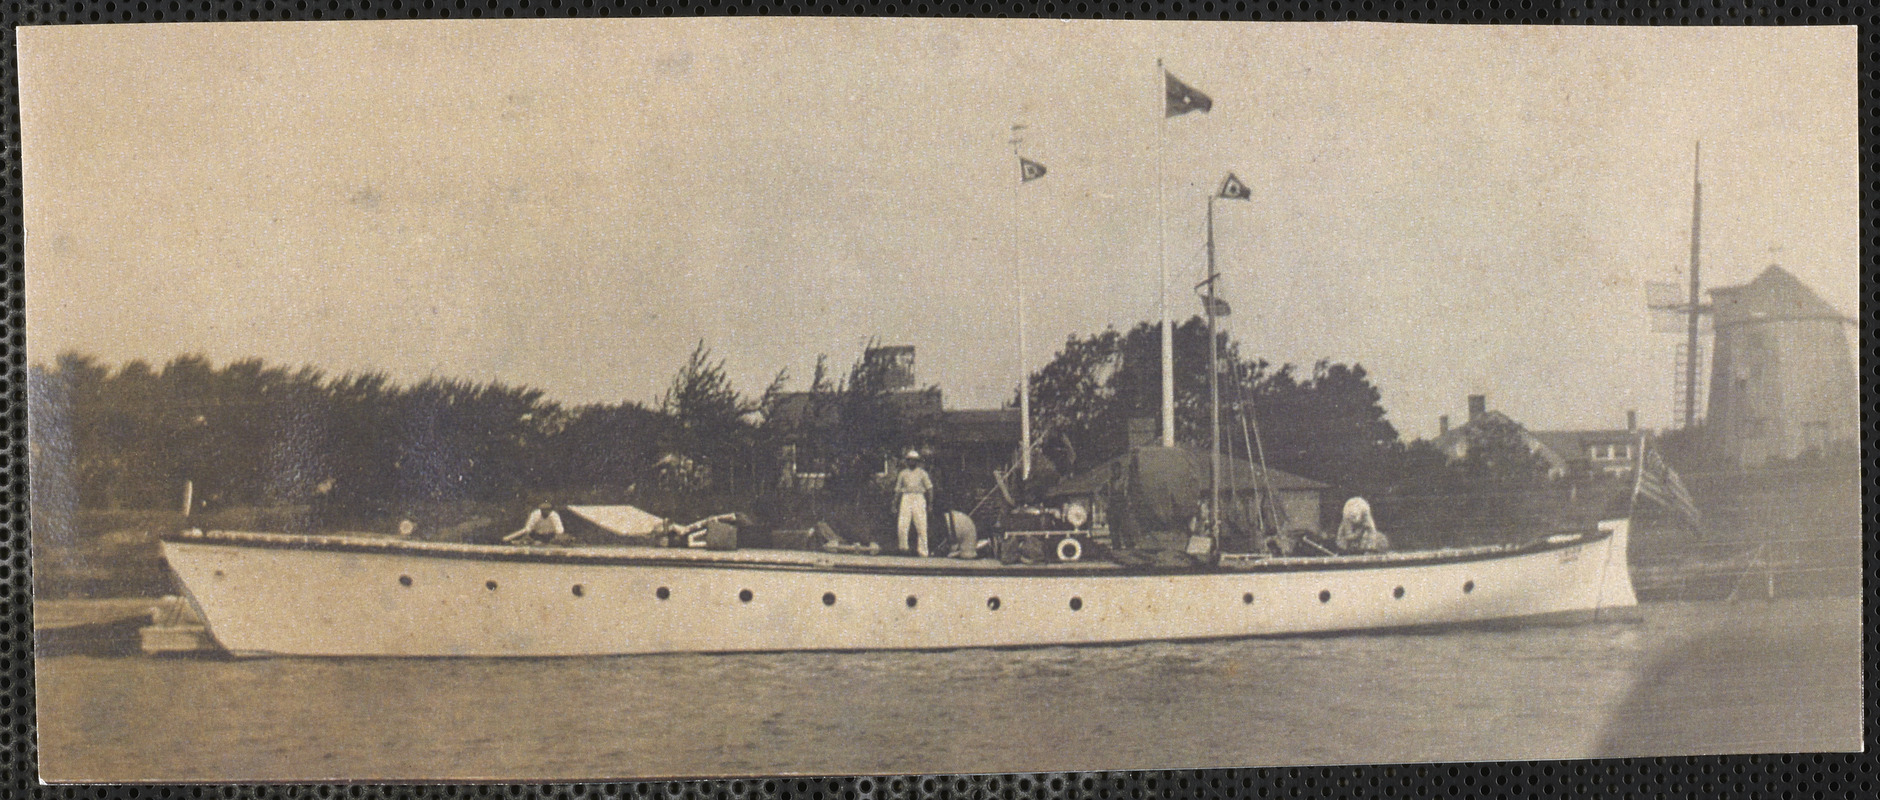 Charles Henry Davis' yacht "Ildico" on Bass River